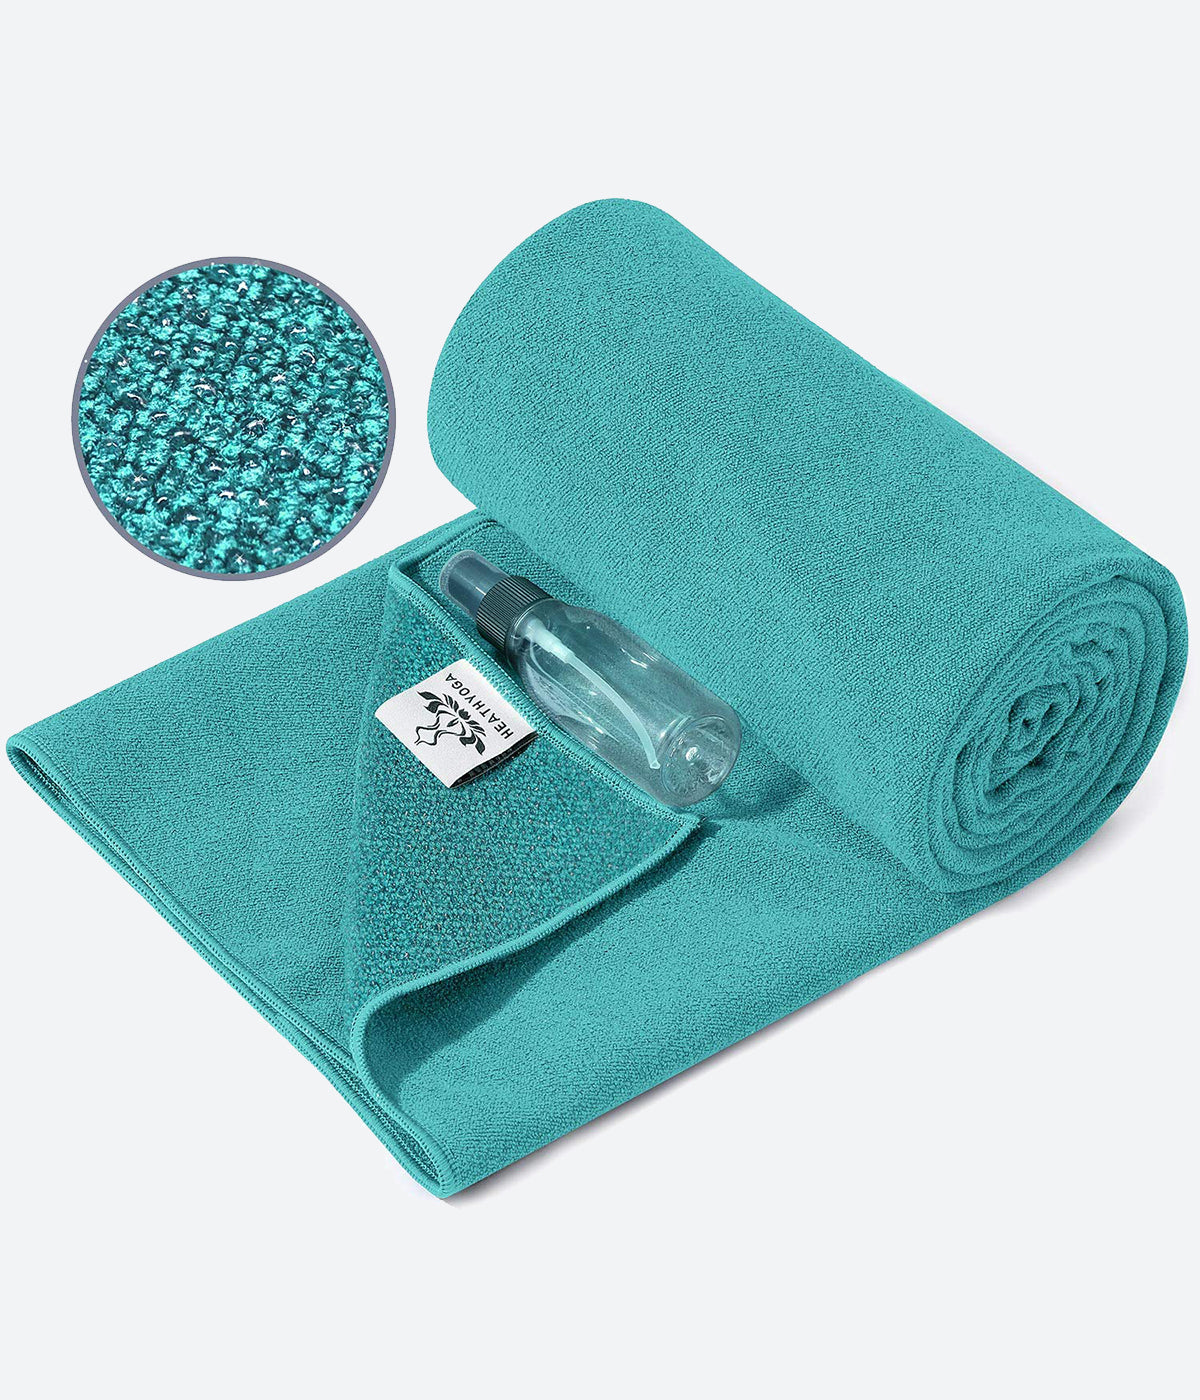 Stickyfiber Hot Yoga Towel Mat Towel - Teal